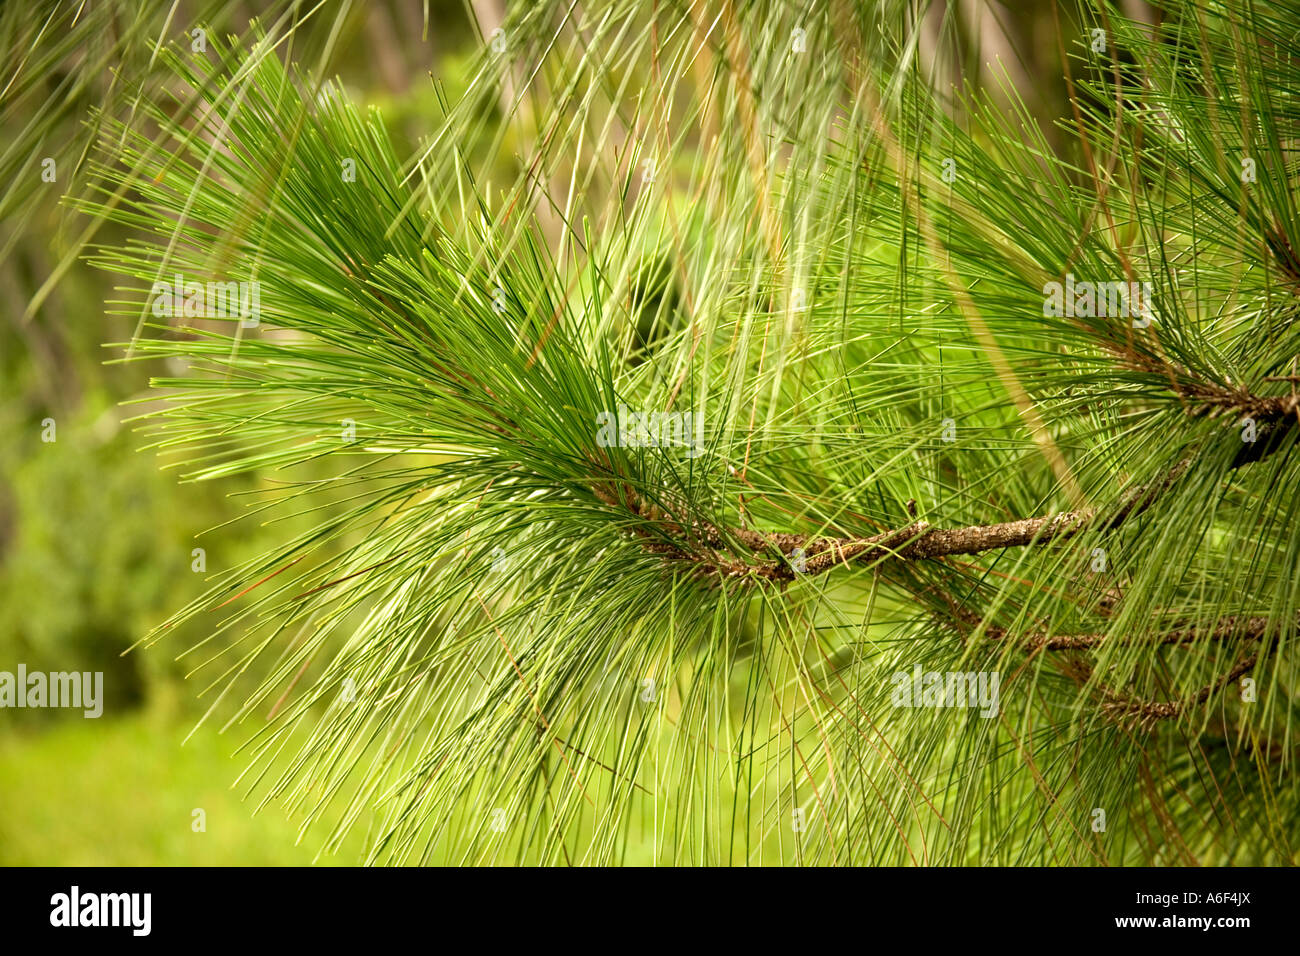 Longleaf Pine branch showing needles, Florida Stock Photo